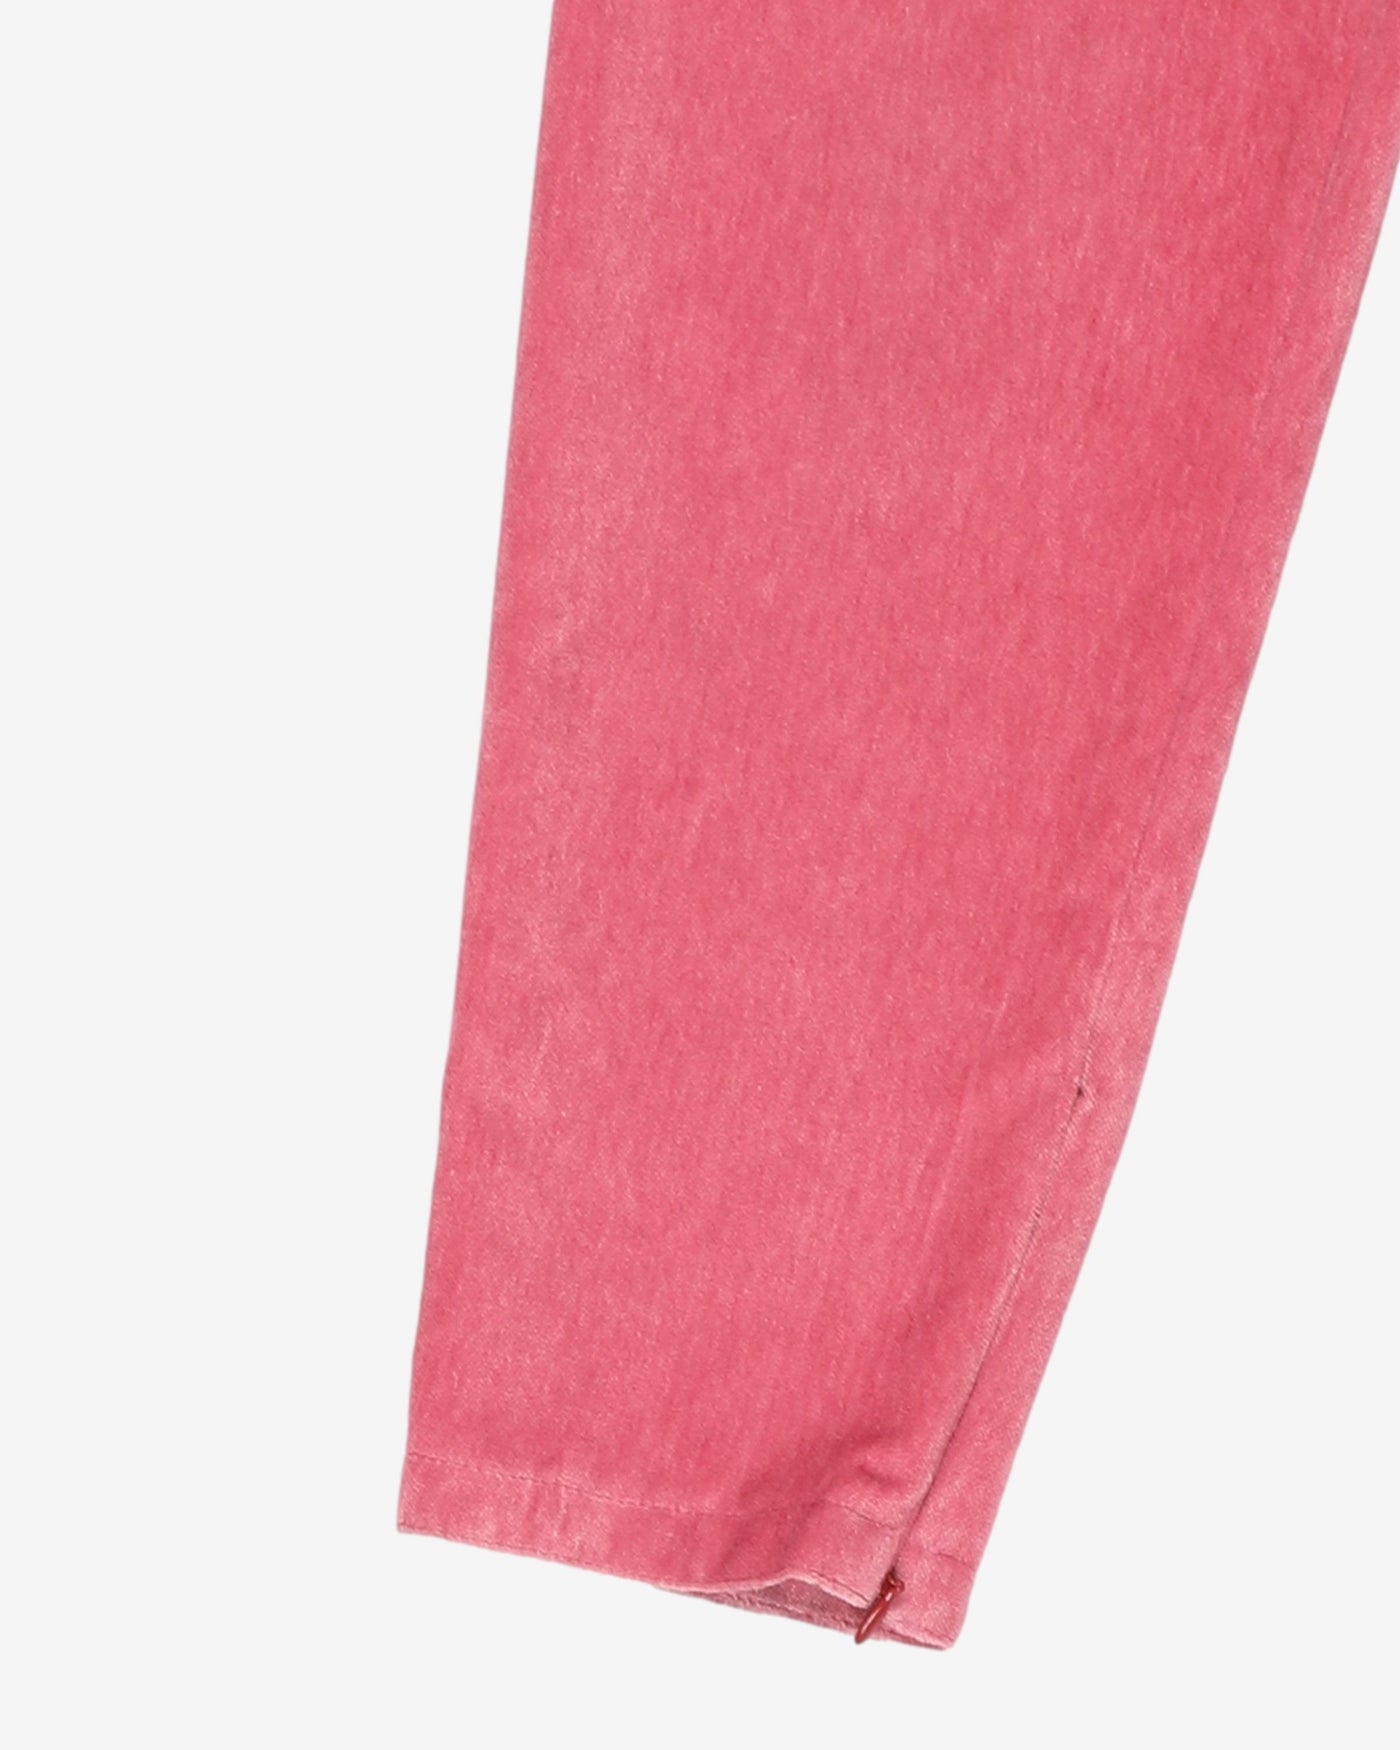 Versus Versace pink velvet trousers - W22 L28